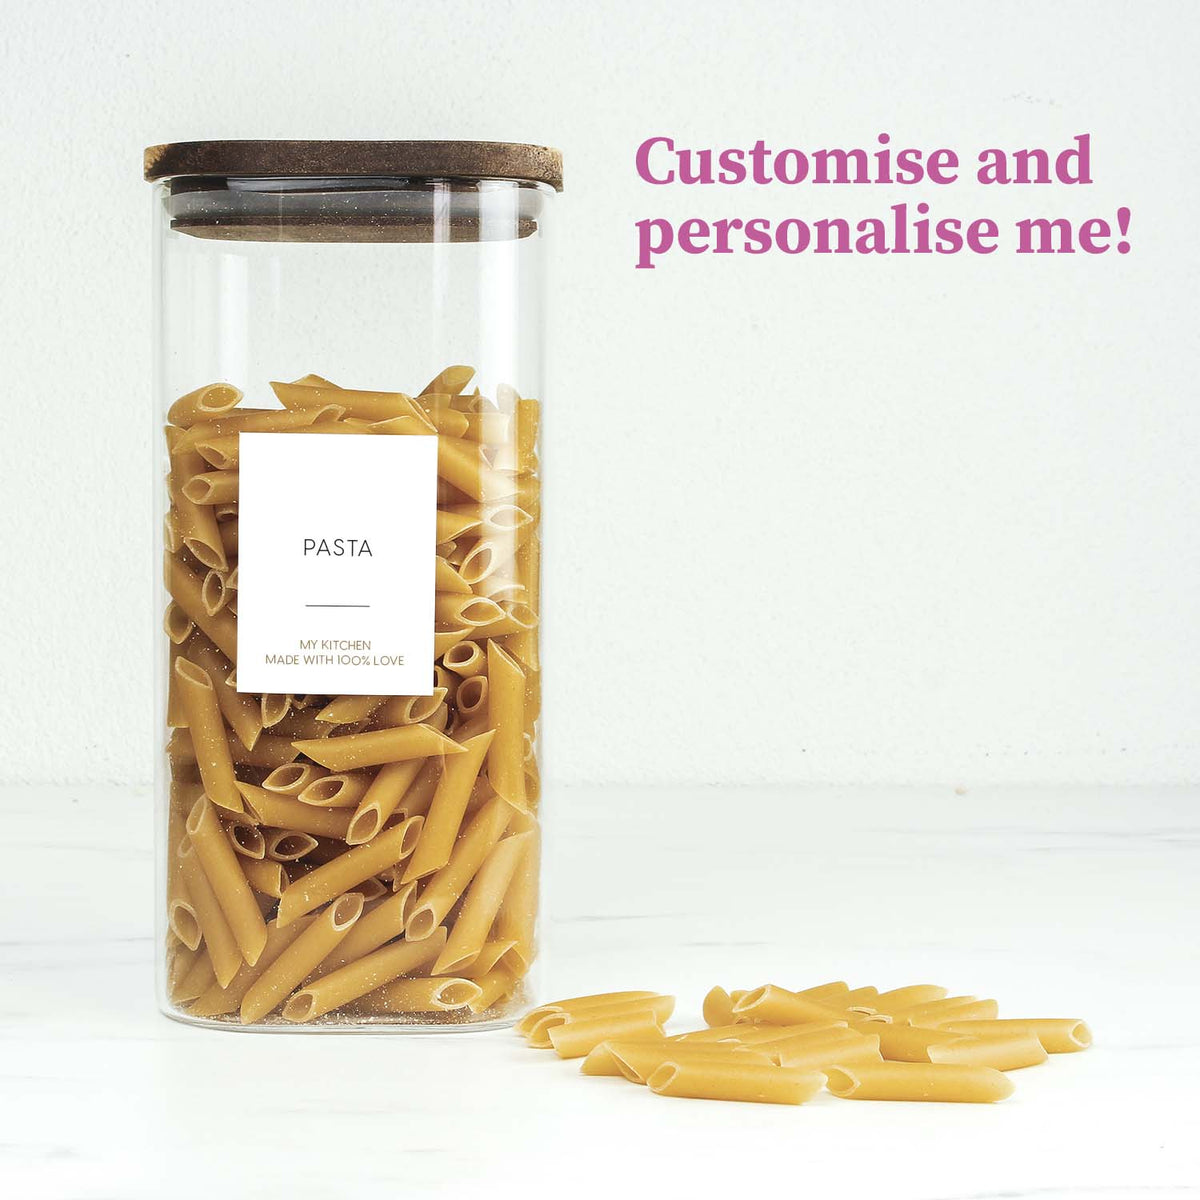 Personalised Custom Pantry Labels - Design 27